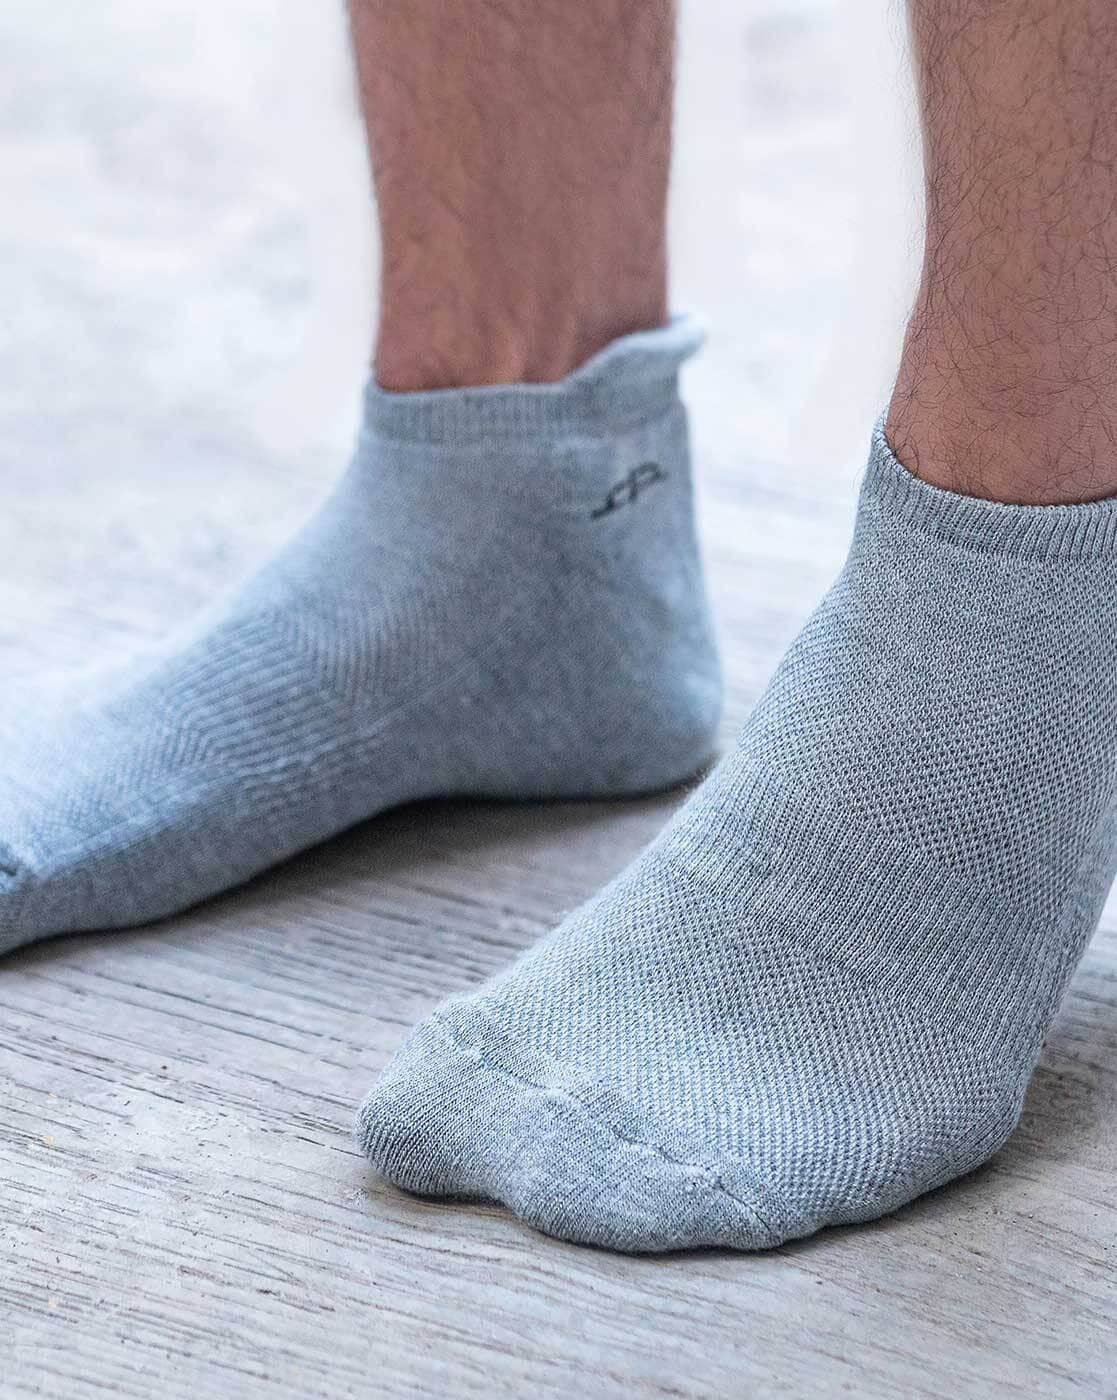 Light Grey Plain Men''s Ankle Socks at Rs 30/pair in Ahmedabad